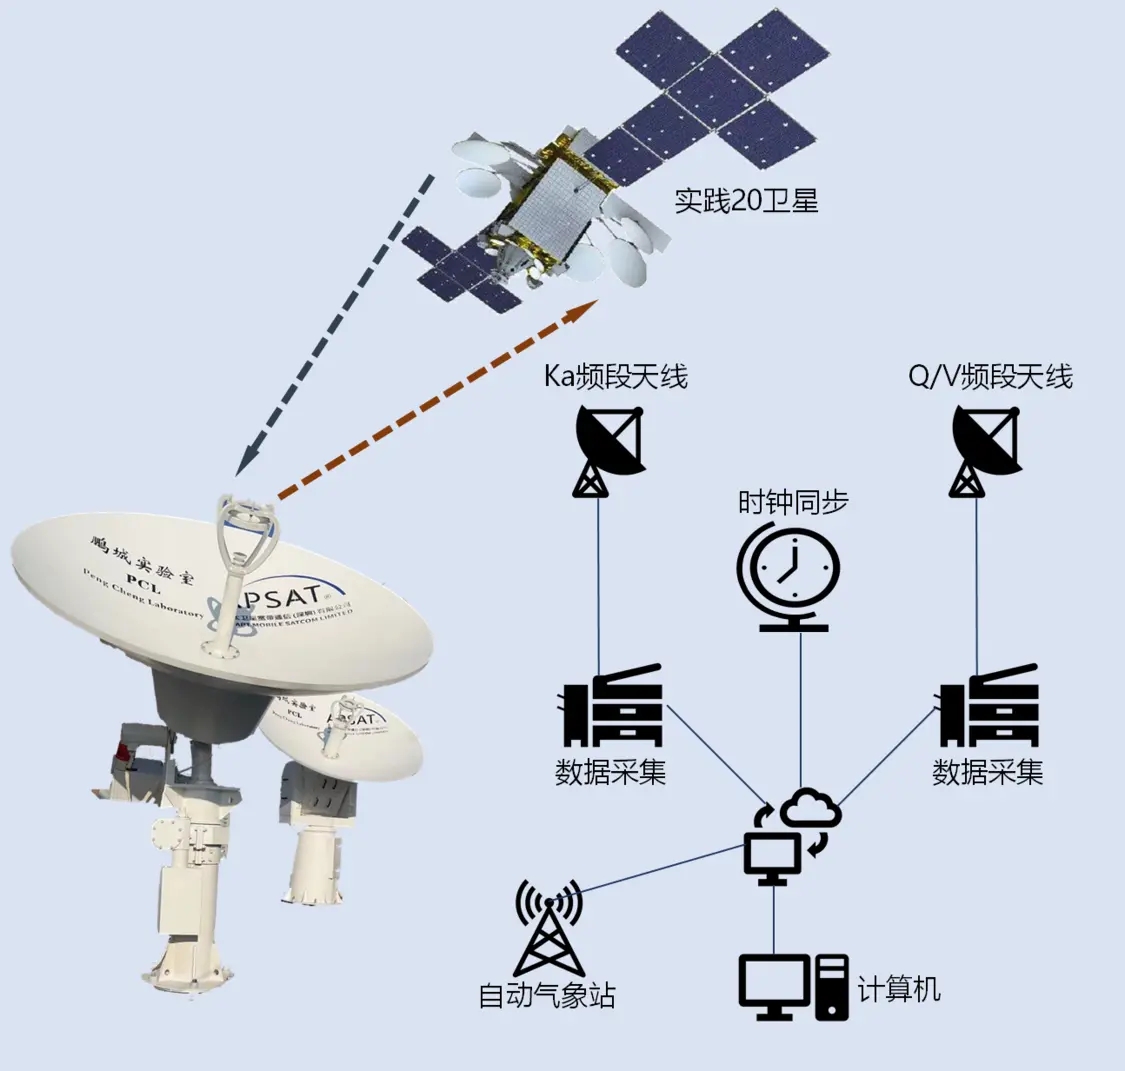 Q／V 频段星地通信试验系统